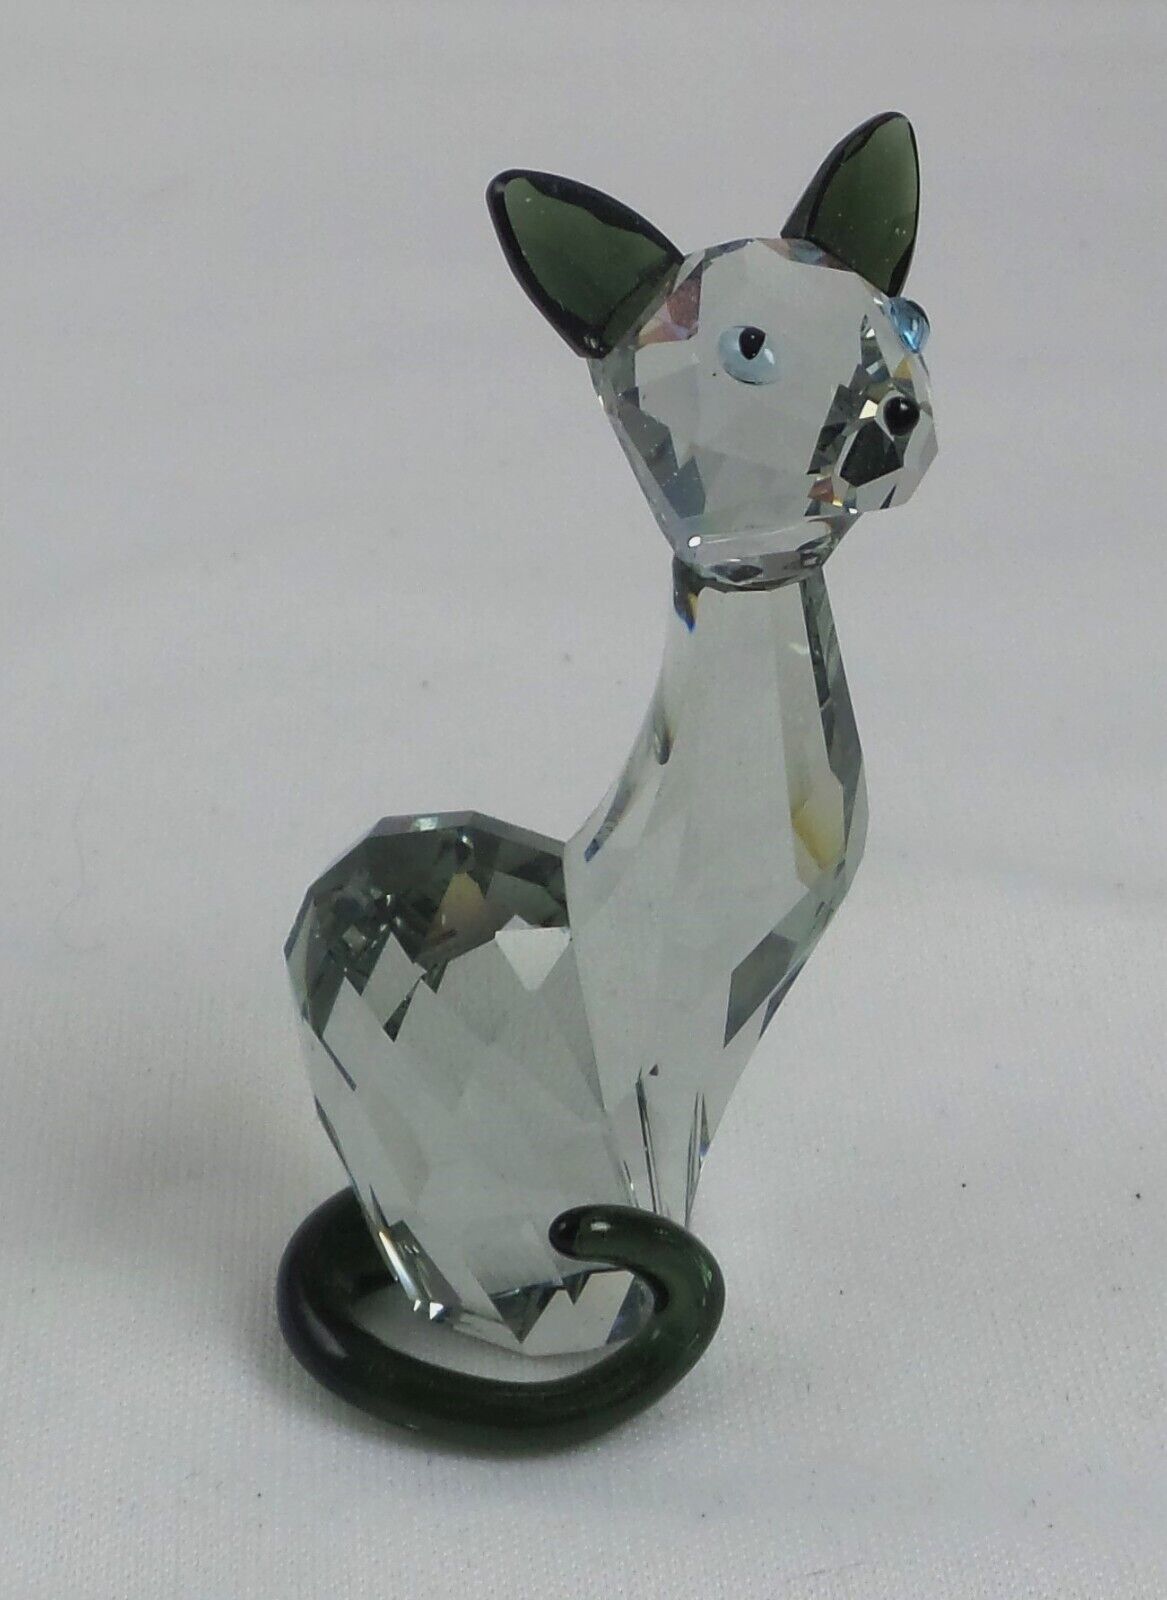 Swarovski Crystal Lovlots Siamese Cat Figure / Figurine